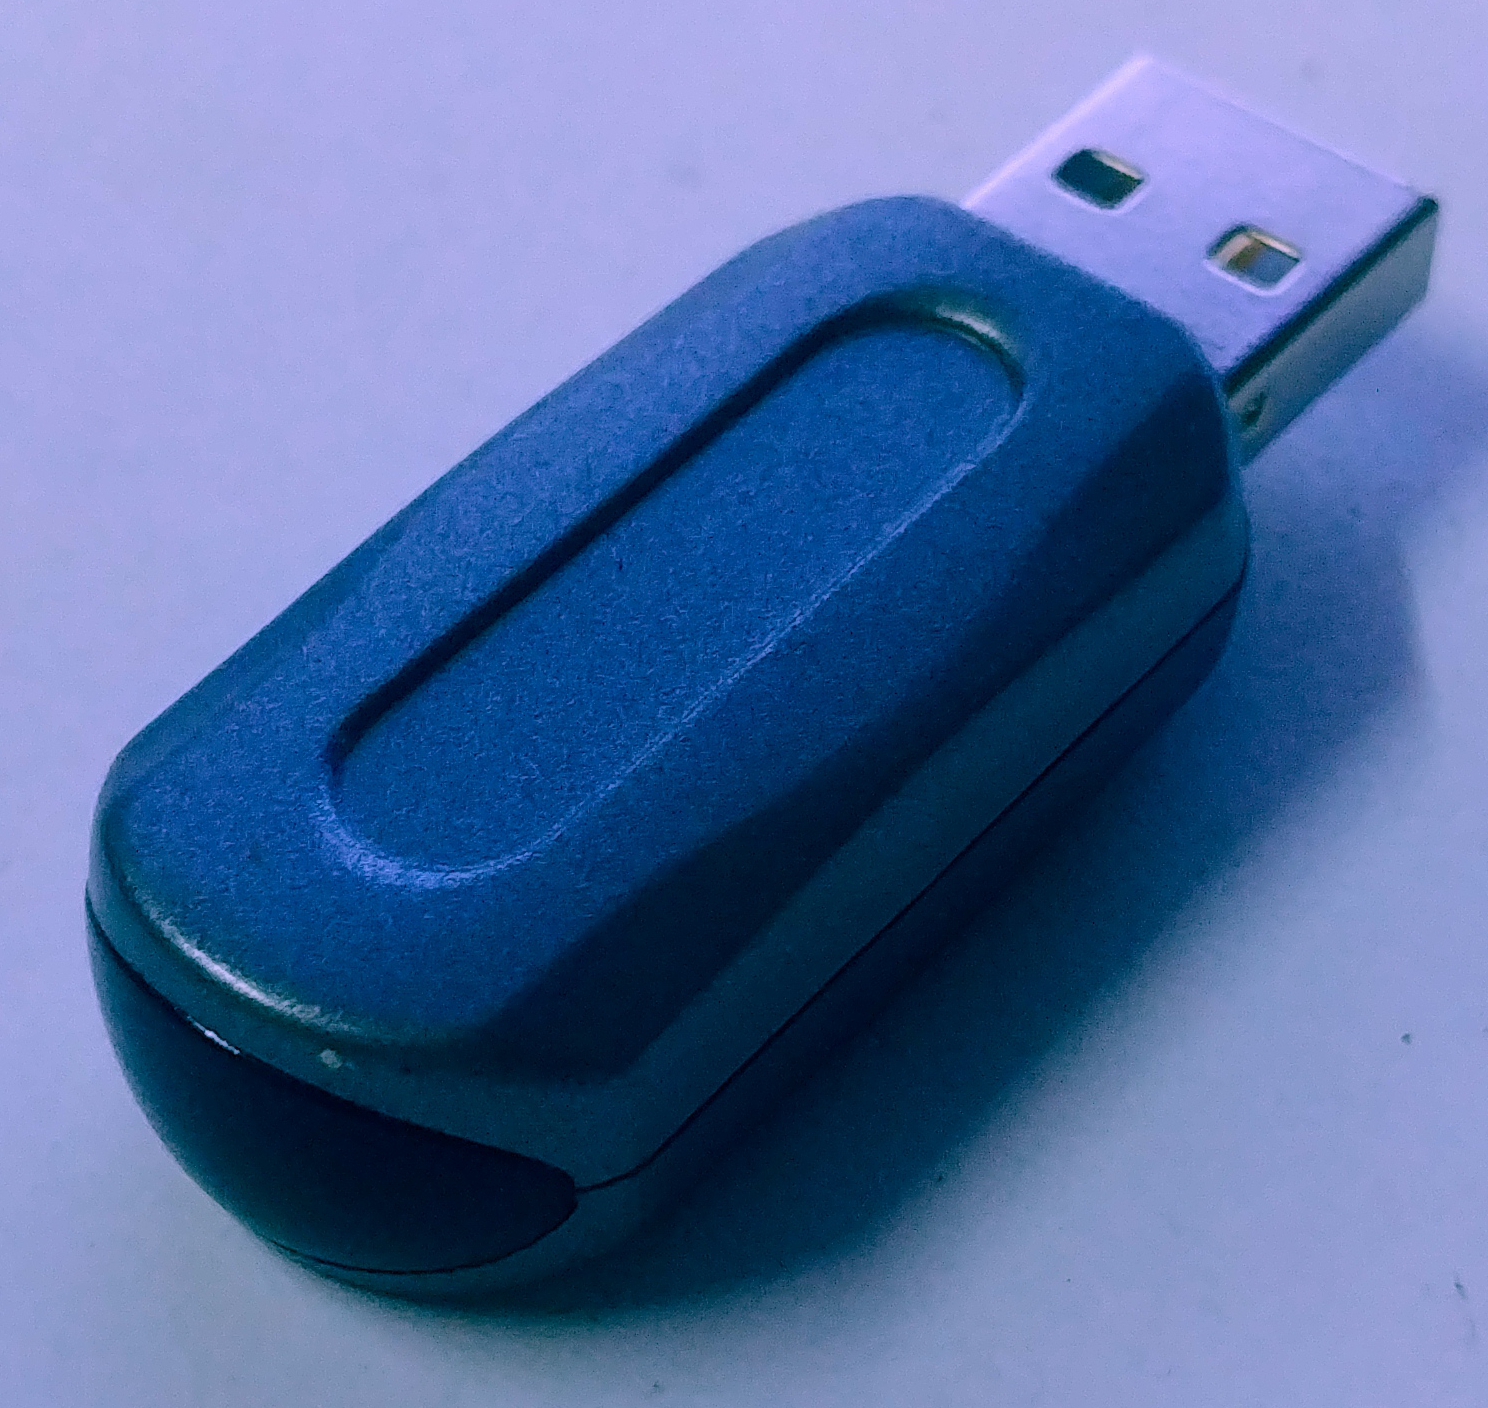 USB IrDA stick